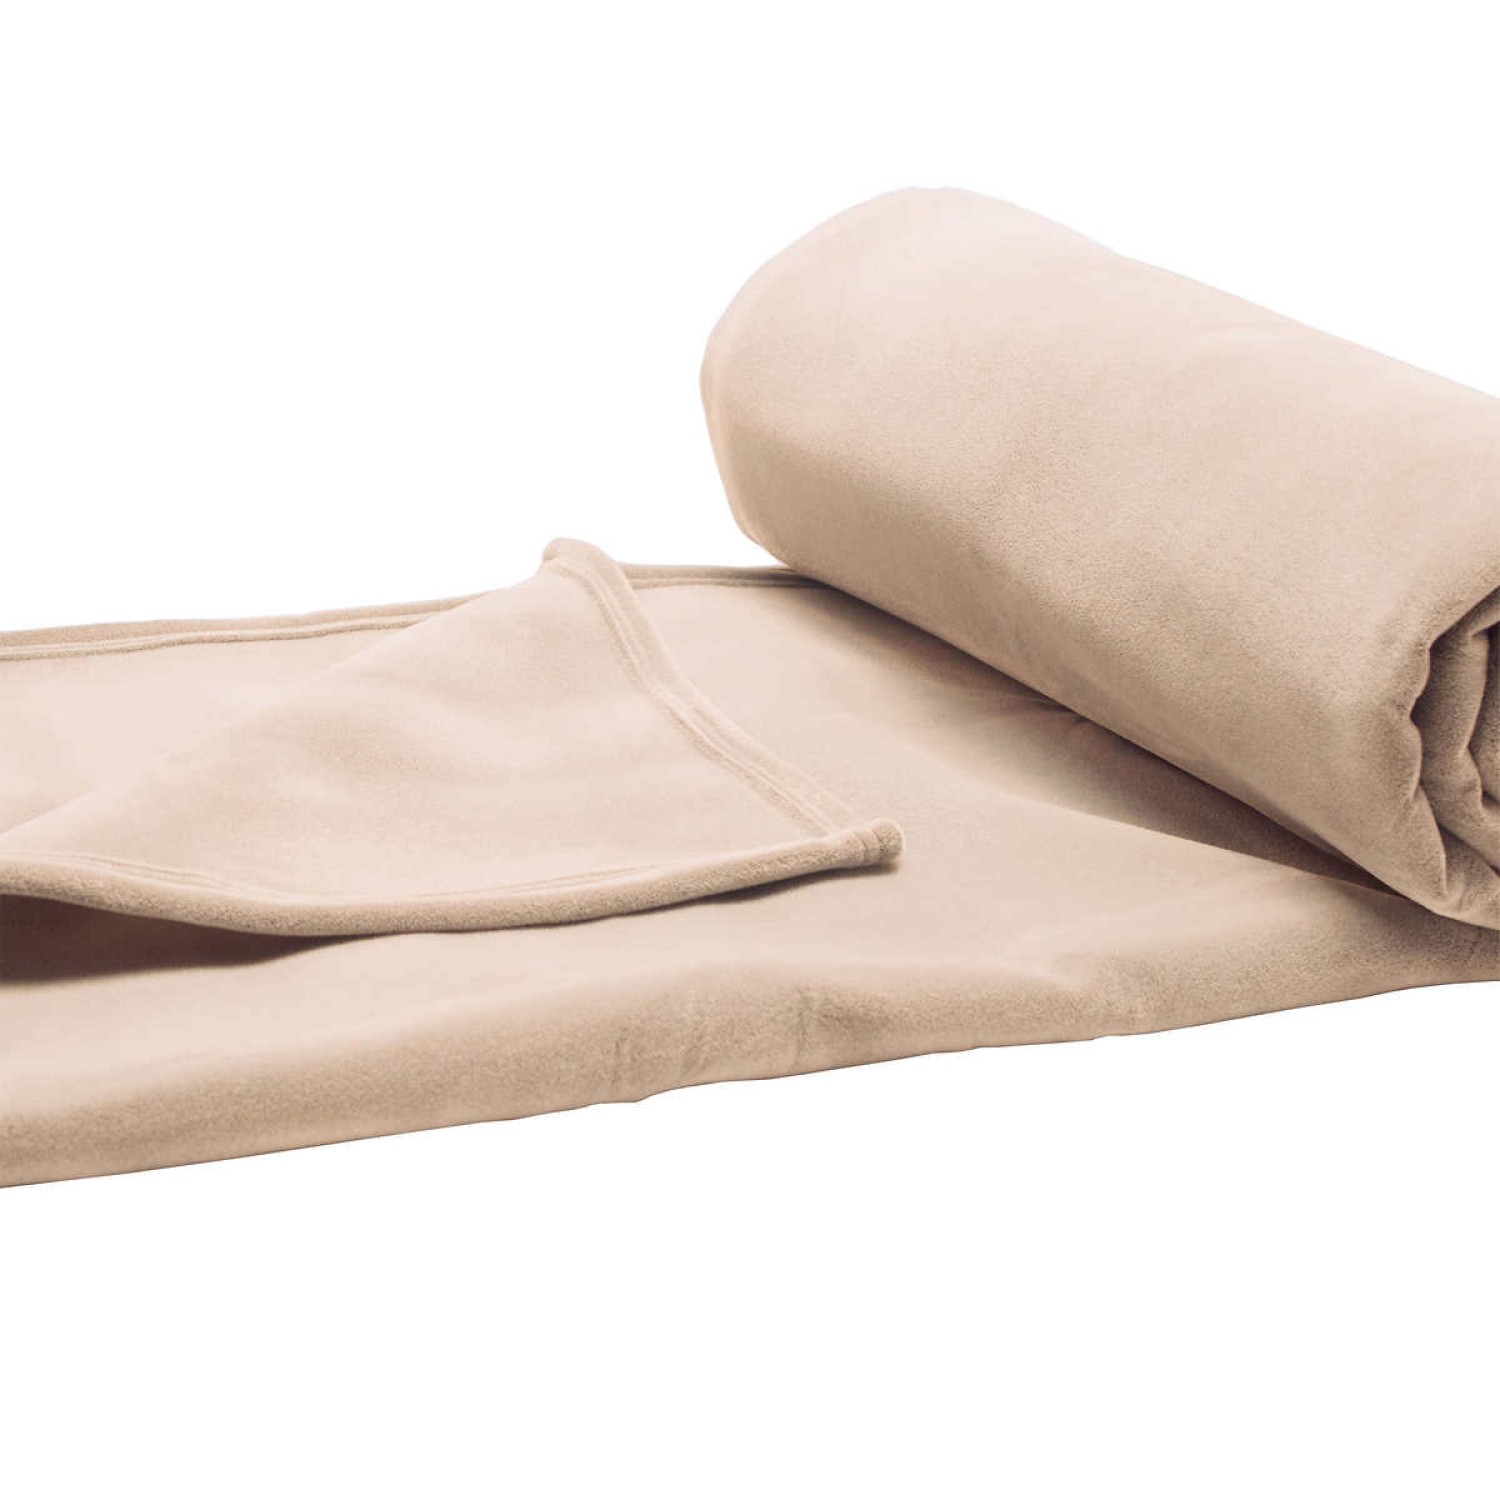 Vellux Original Blanket Twin Ivory